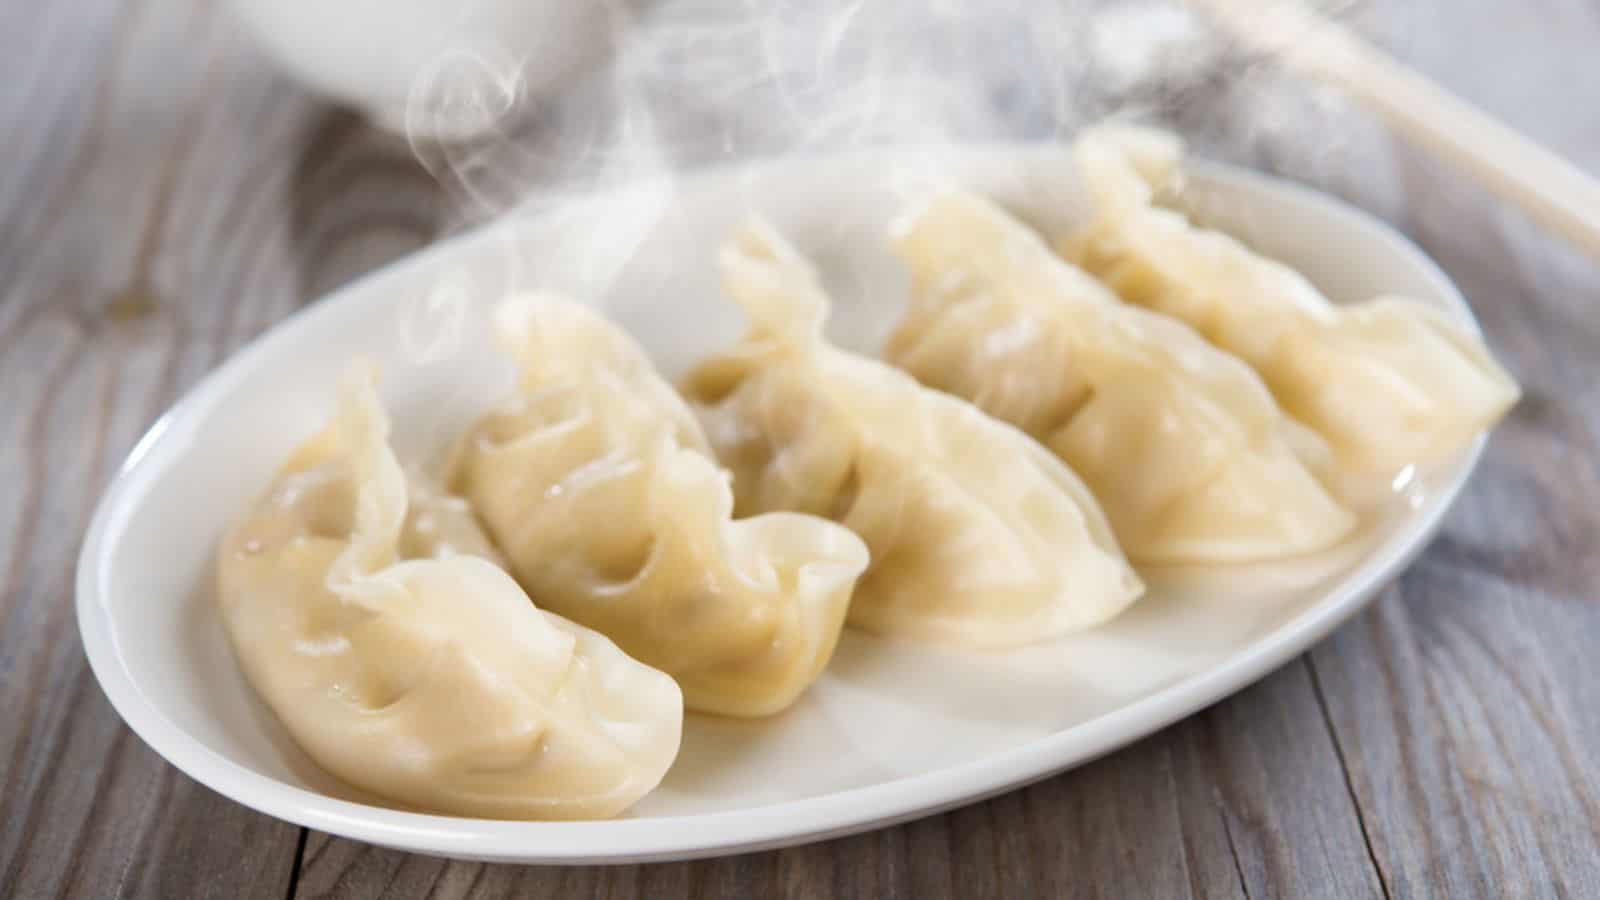 Asian Chinese meal fresh dumplings